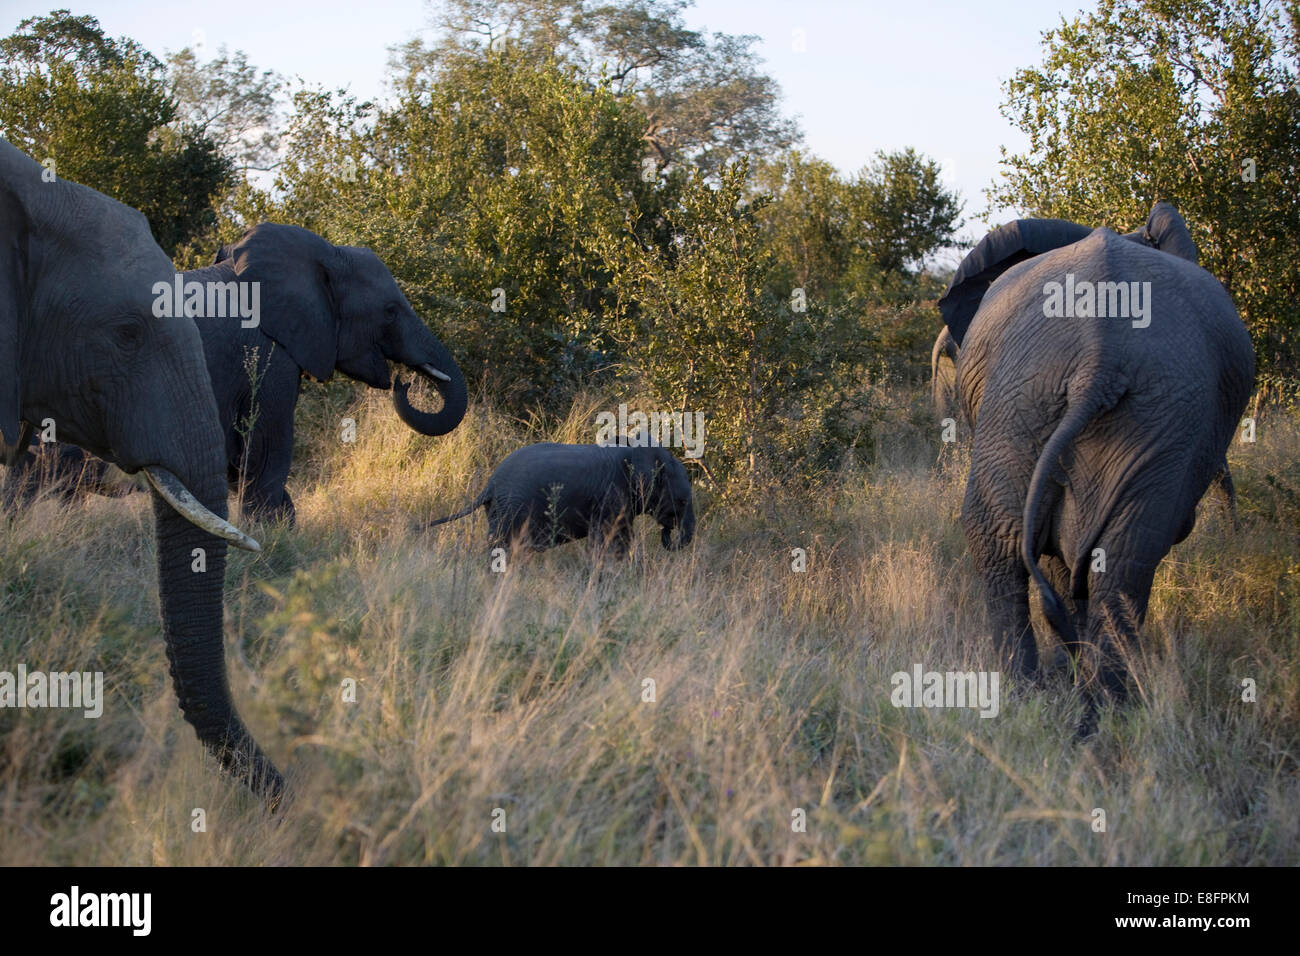 Herd of Elephants (Loxodonta africana) in bush, South Africa Stock Photo